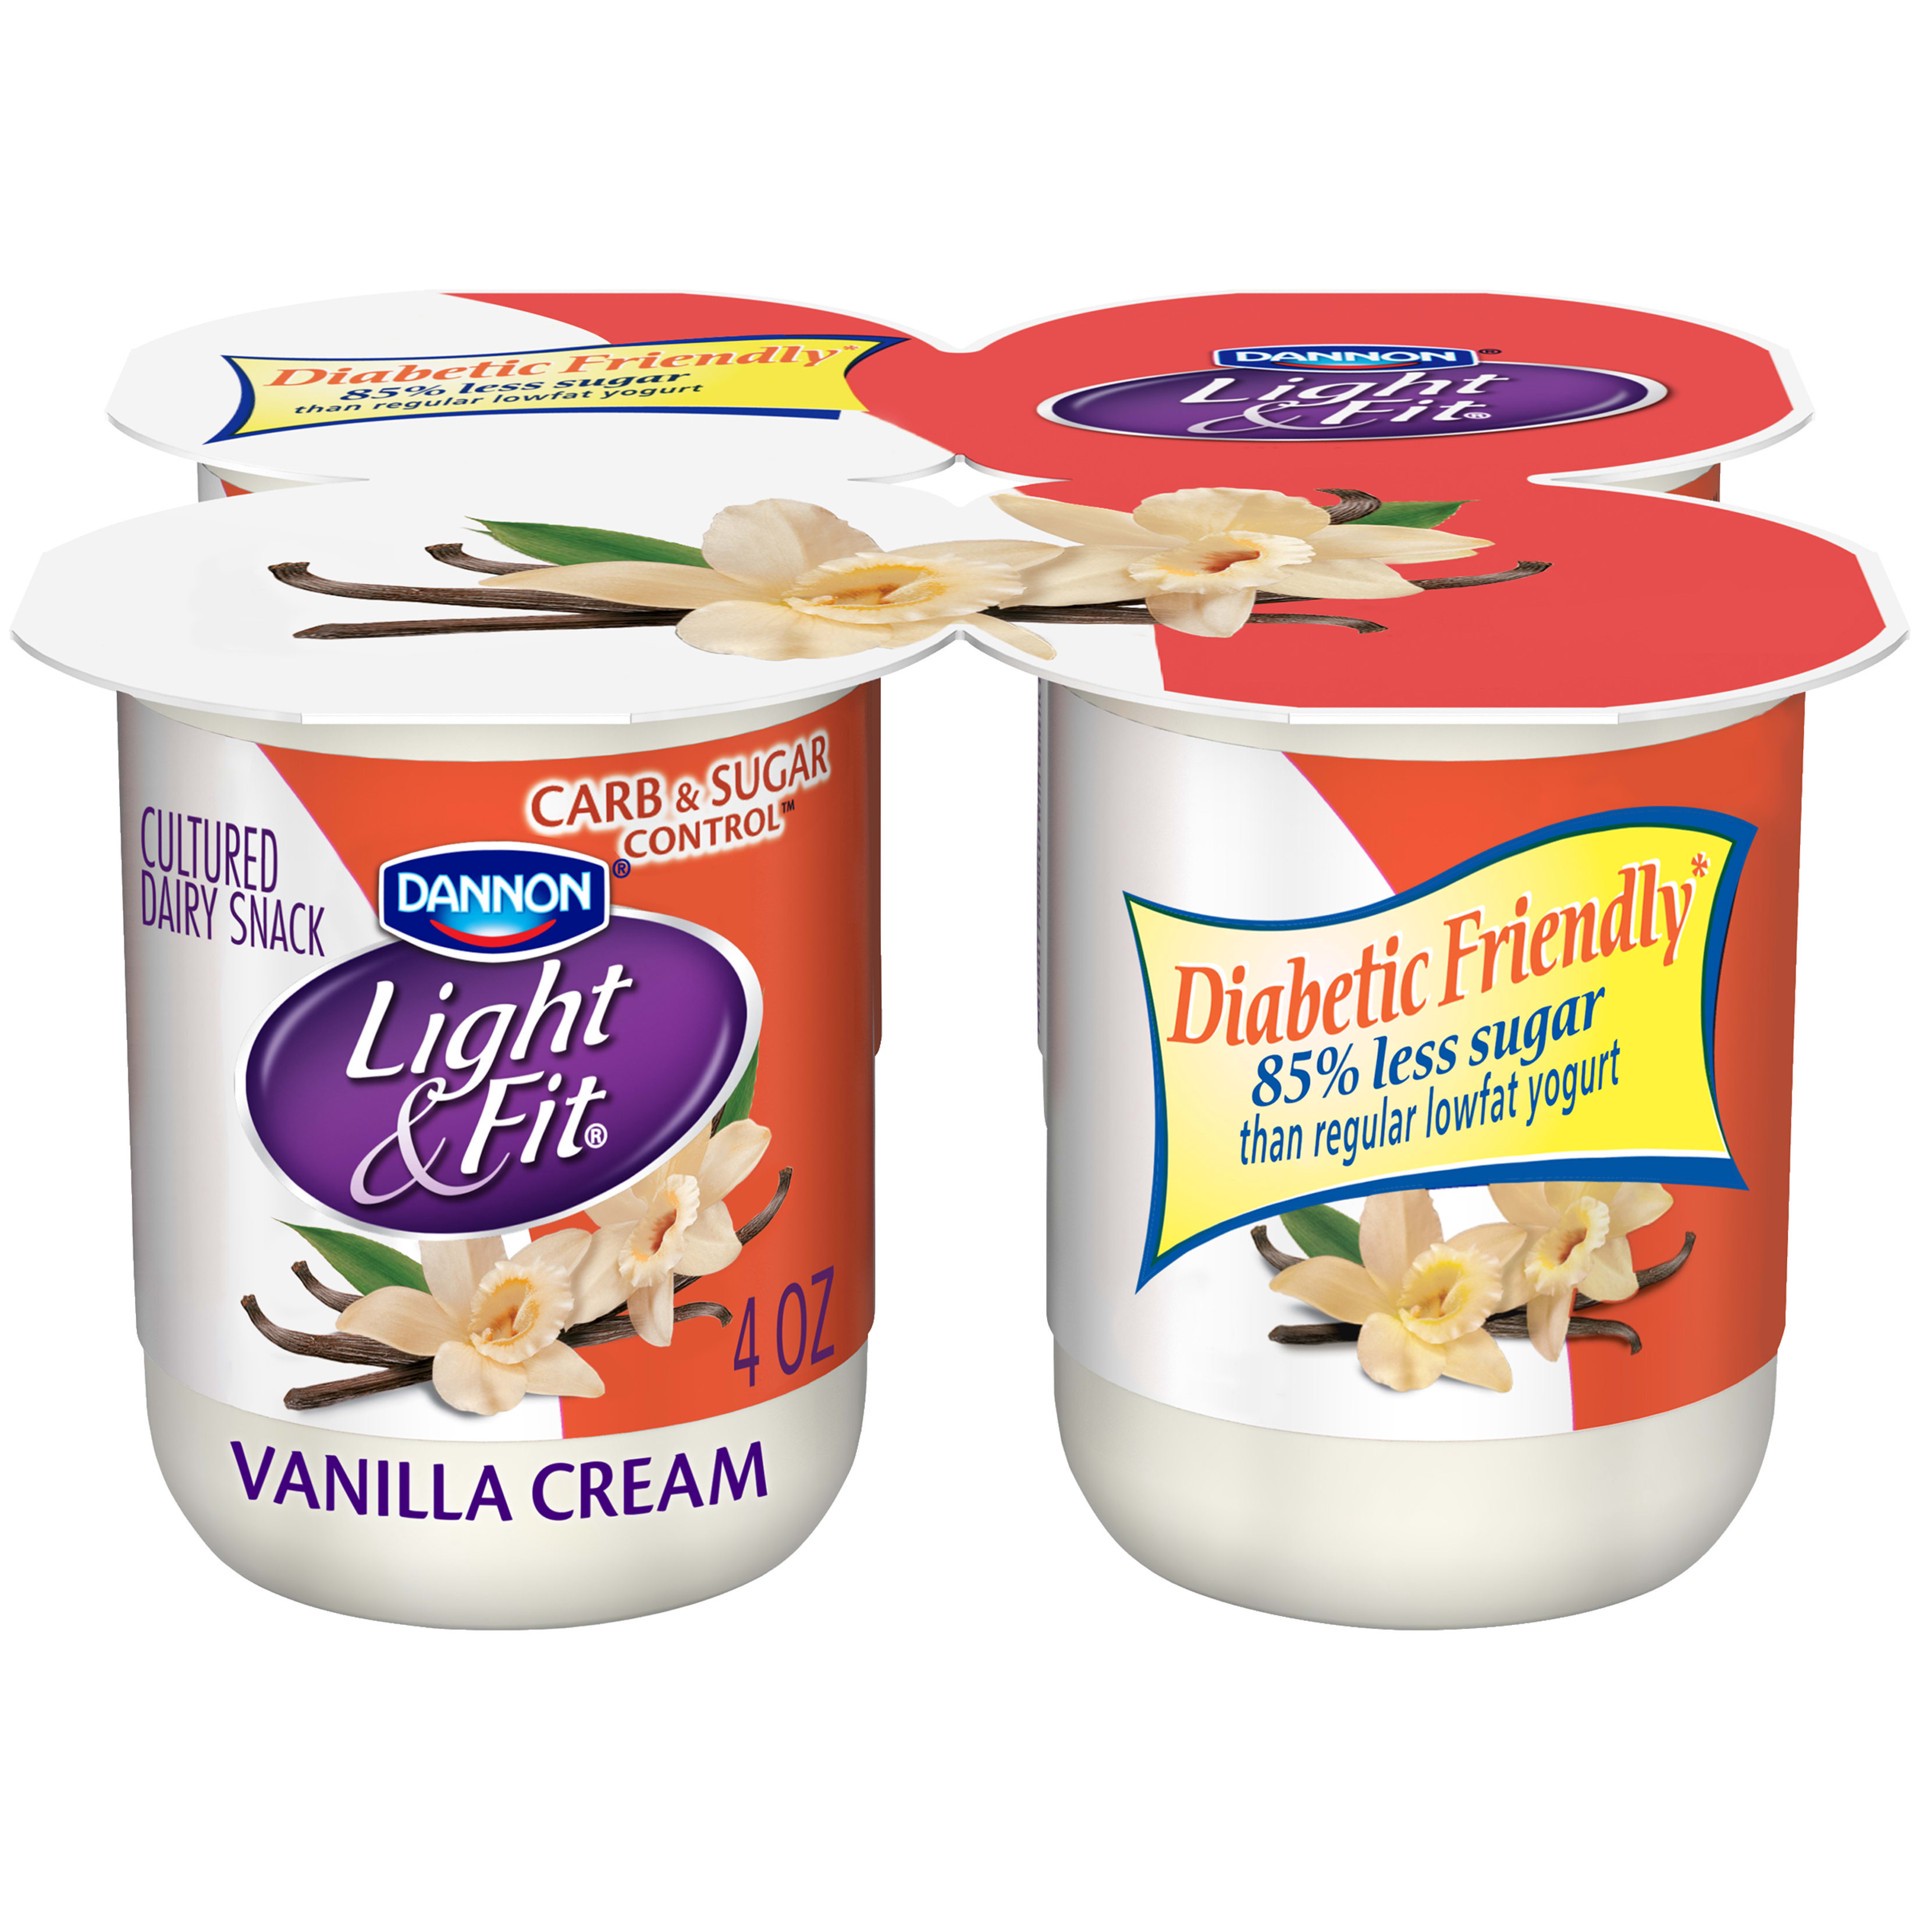 slide 1 of 8, Light + Fit Dannon Light + Fit Carb & Sugar Control Cultured Dairy Snack, Vanilla Cream, Gluten-Free, 0g Added Sugar*, 4 oz., 4 Pack, 4 oz